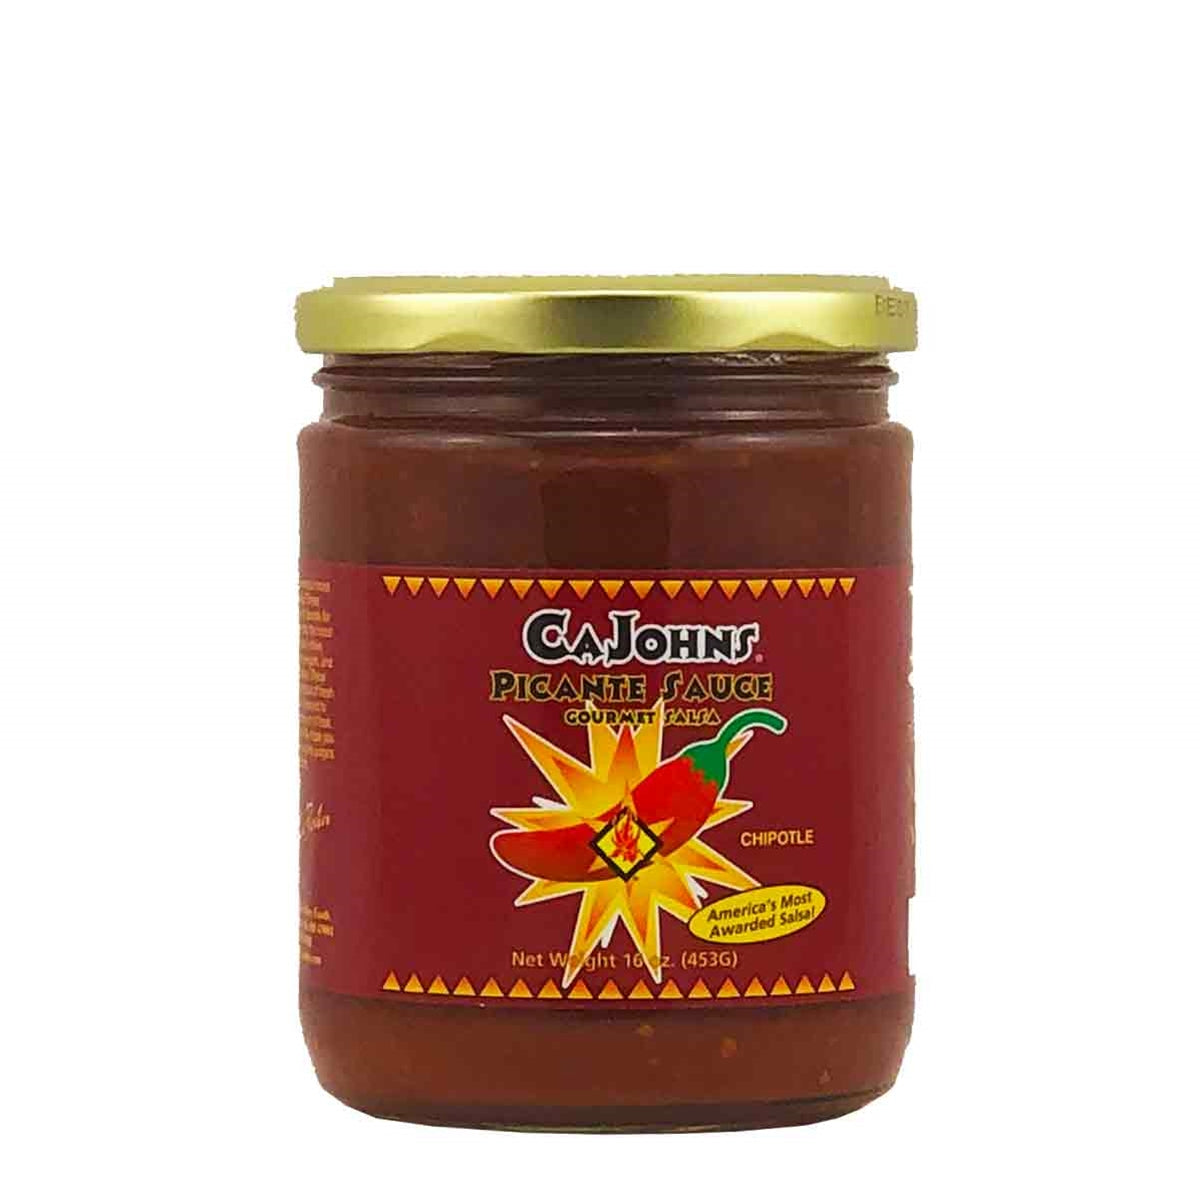 Cajohns Chipotle Picante Sauce